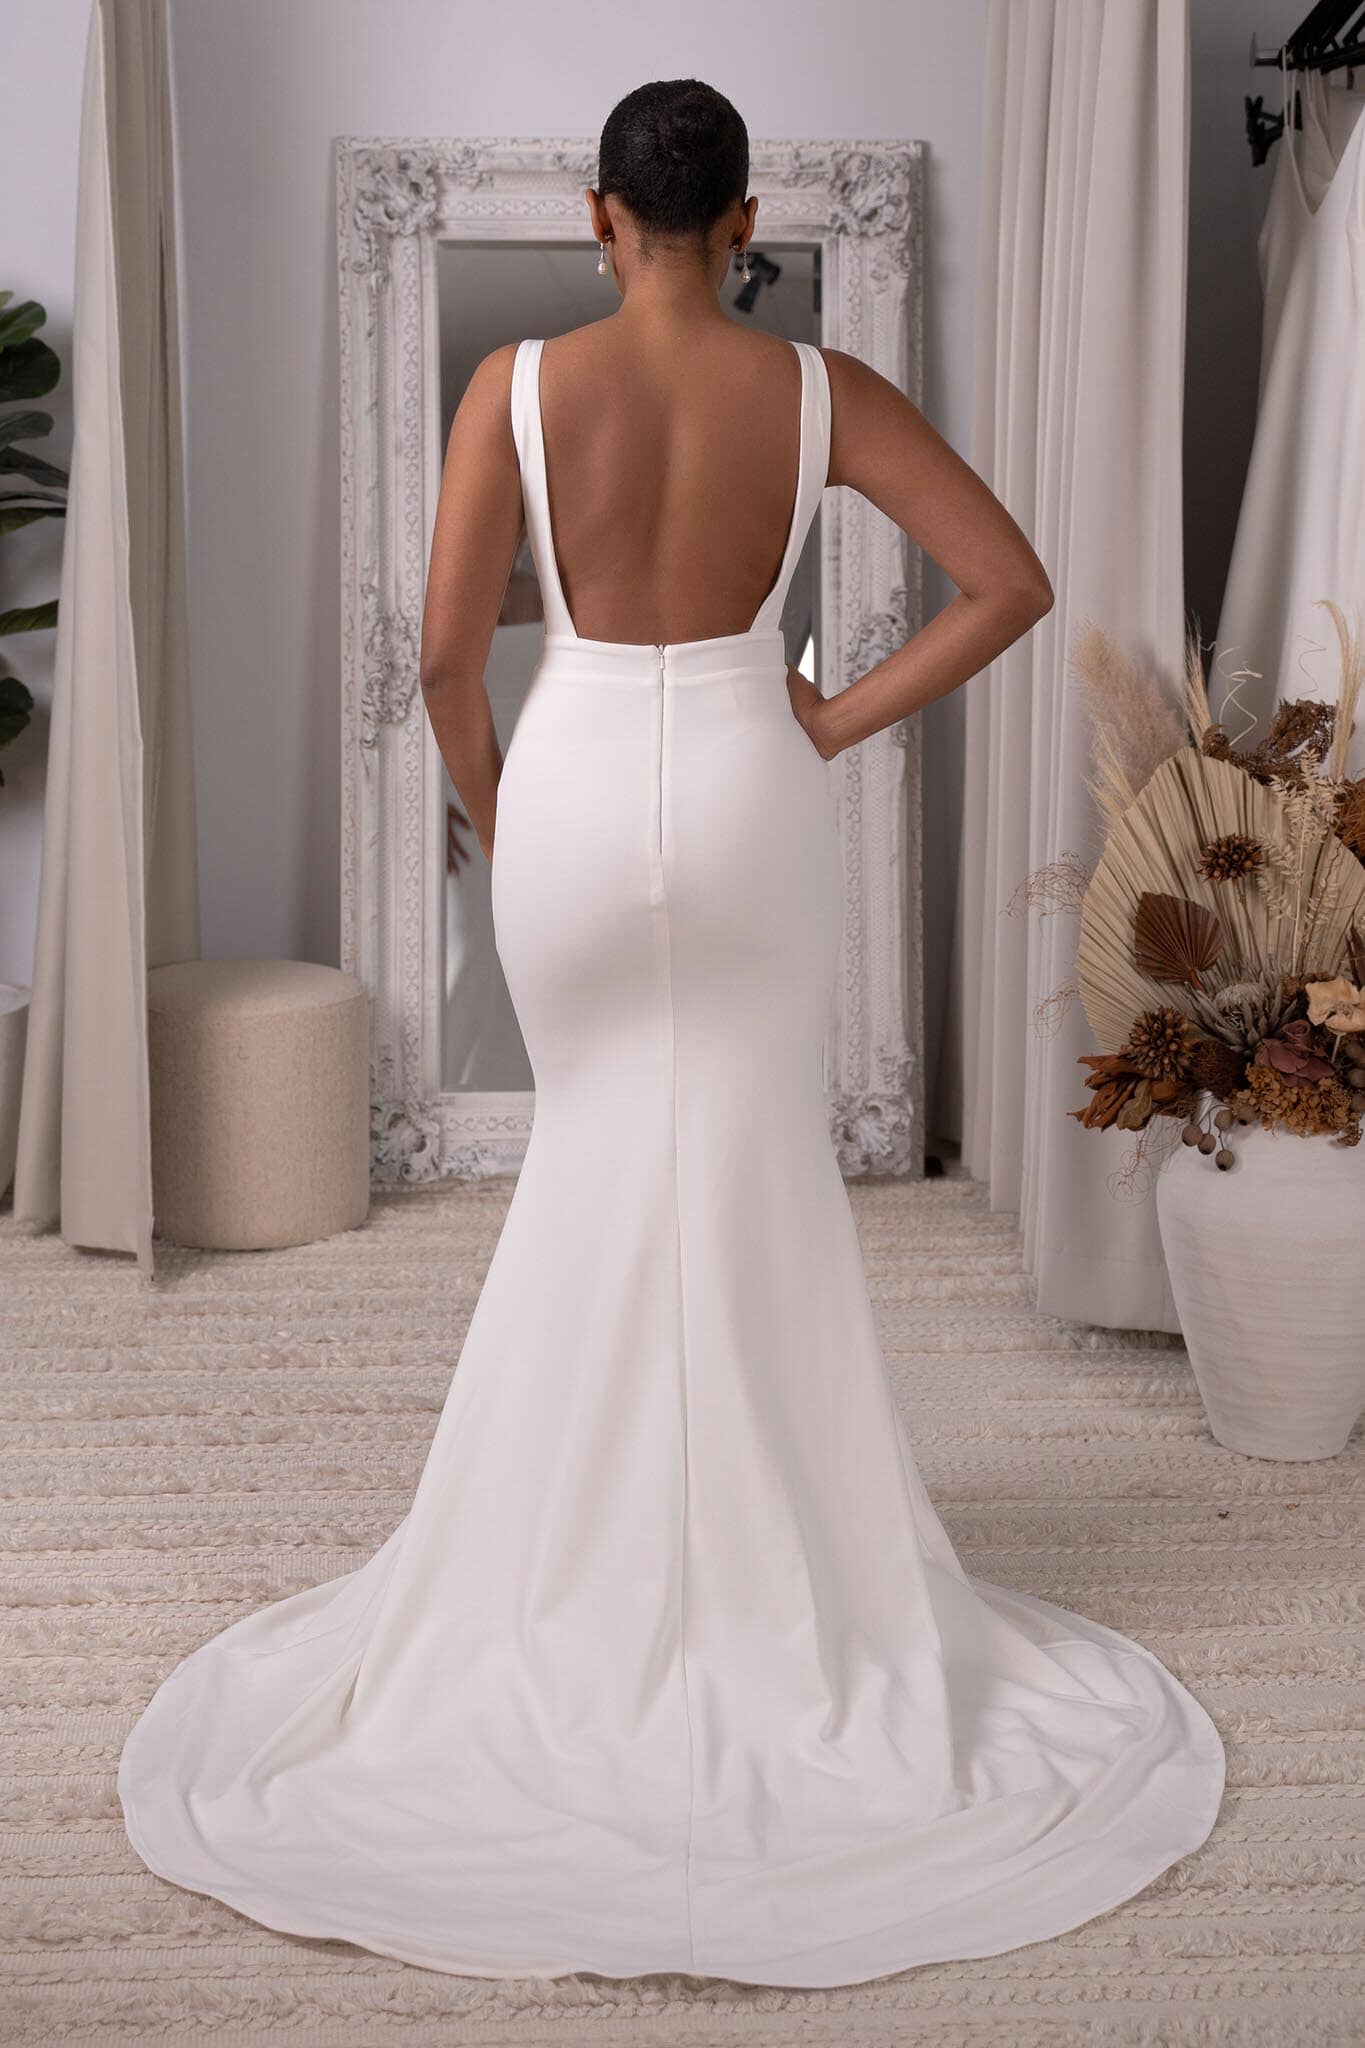 Crepe Sophia Tolli Simone Y11961 Wedding Gown | Dimitra Designs